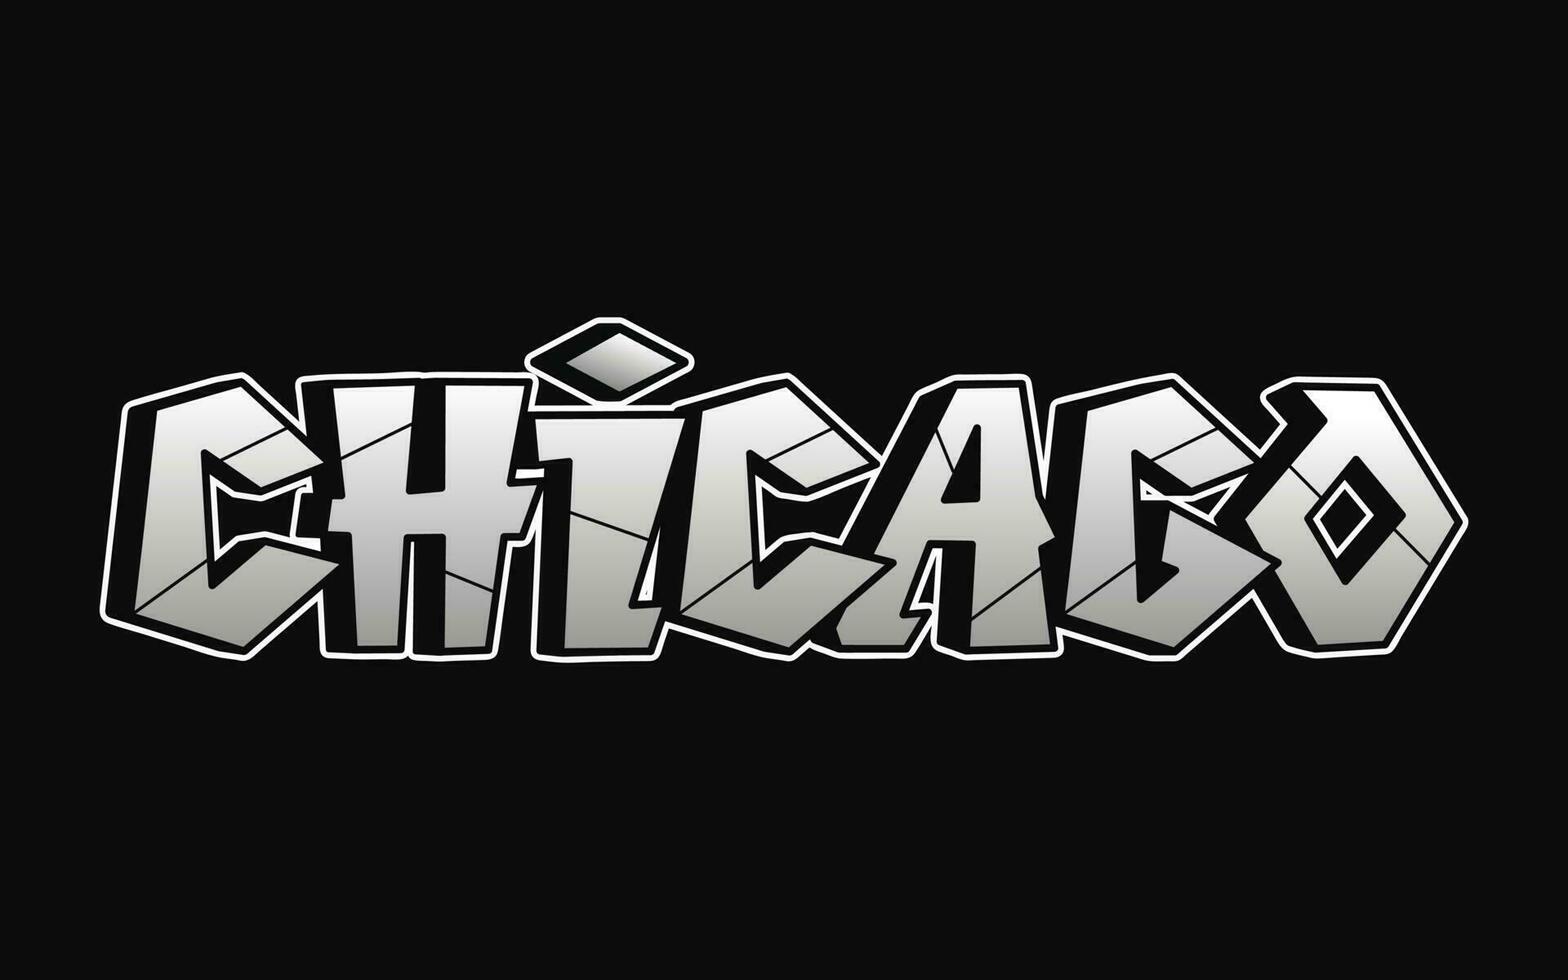 Chicago Wort Graffiti Stil letters.vector Hand gezeichnet Gekritzel Karikatur Logo Illustration. komisch cool Chicago Briefe, Mode, Graffiti Stil drucken zum T-Shirt, Poster Konzept vektor